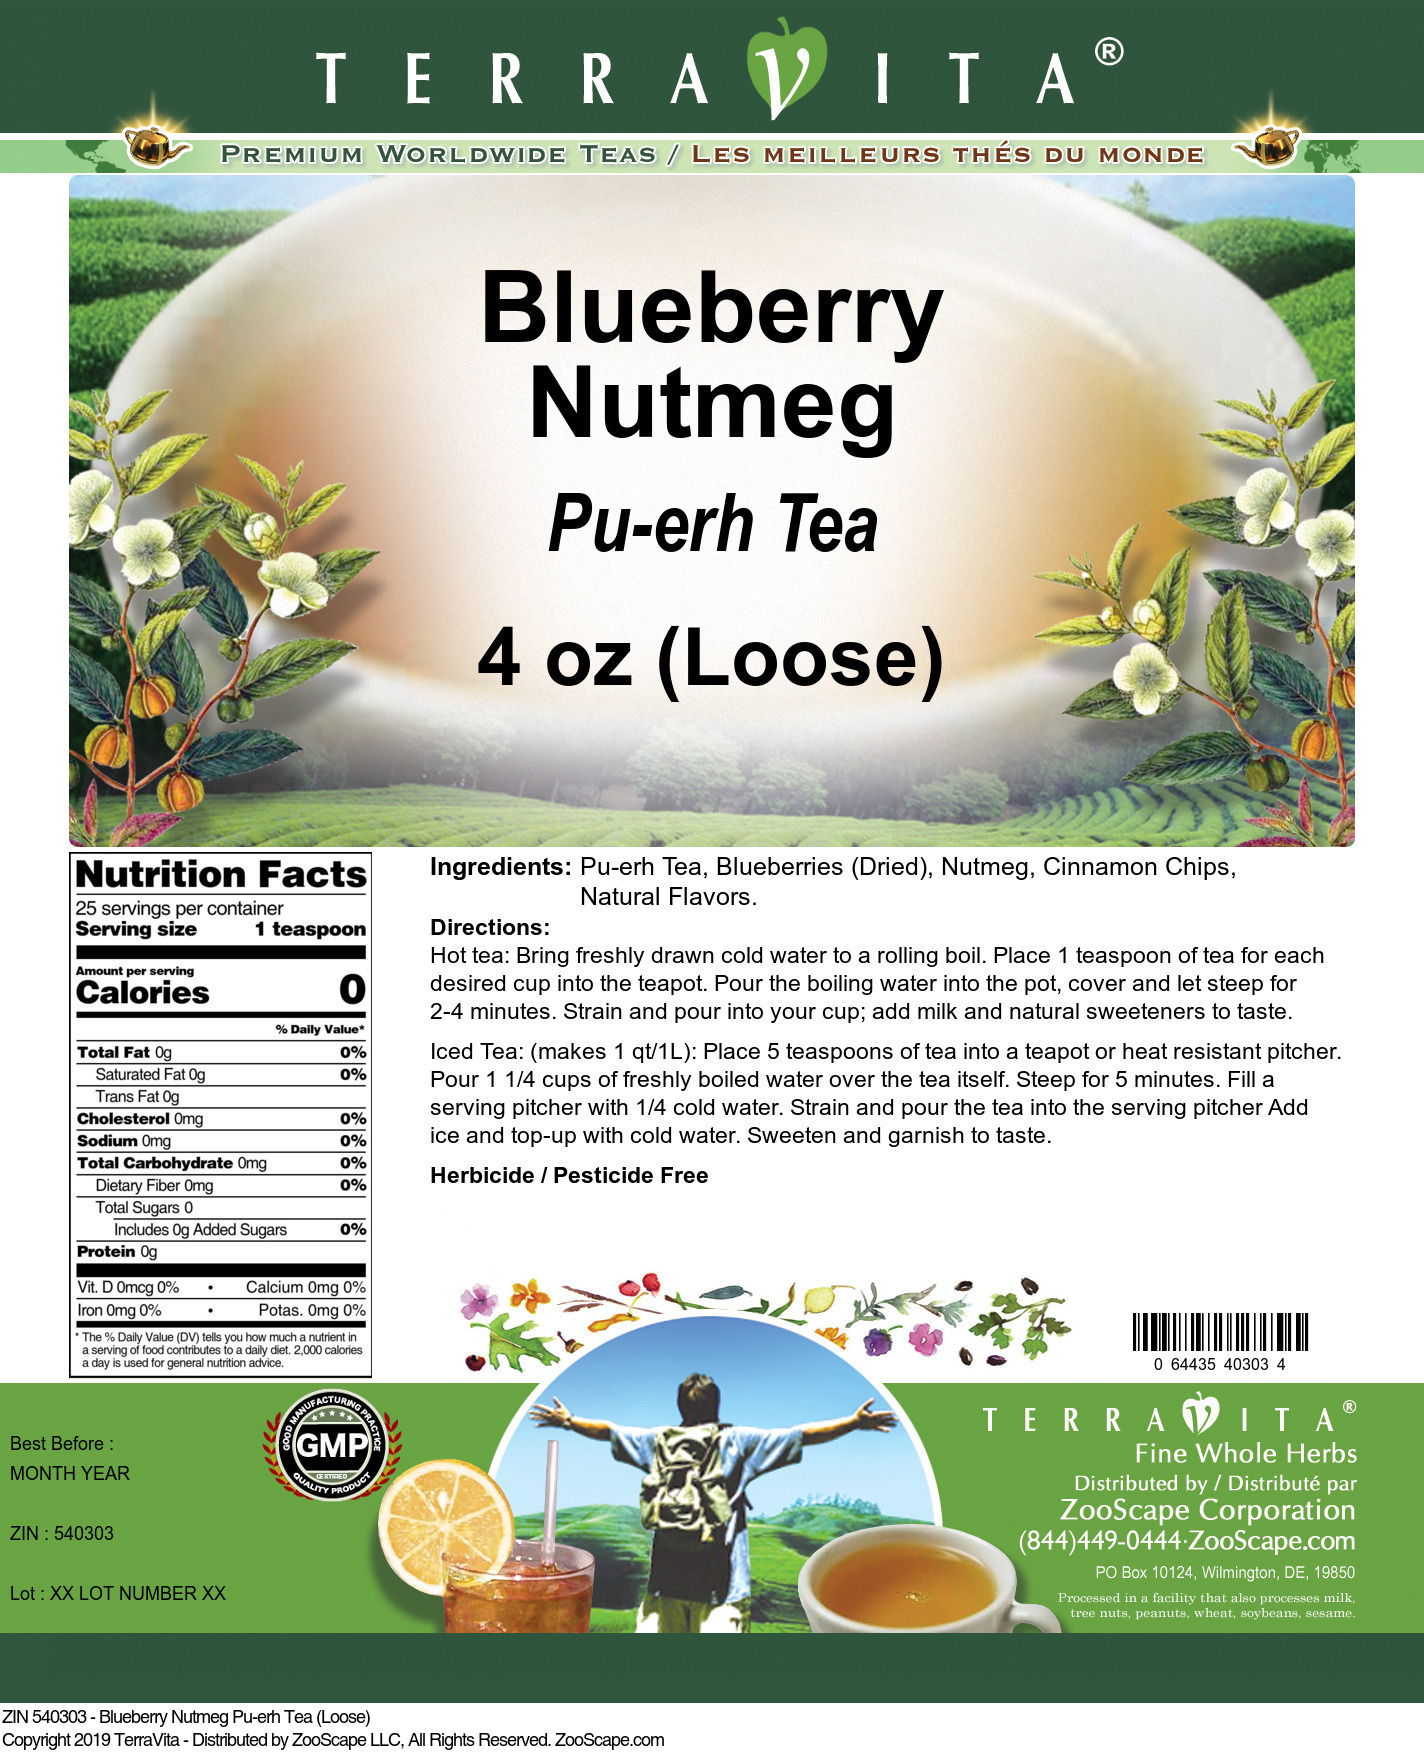 Blueberry Nutmeg Pu-erh Tea (Loose) - Label